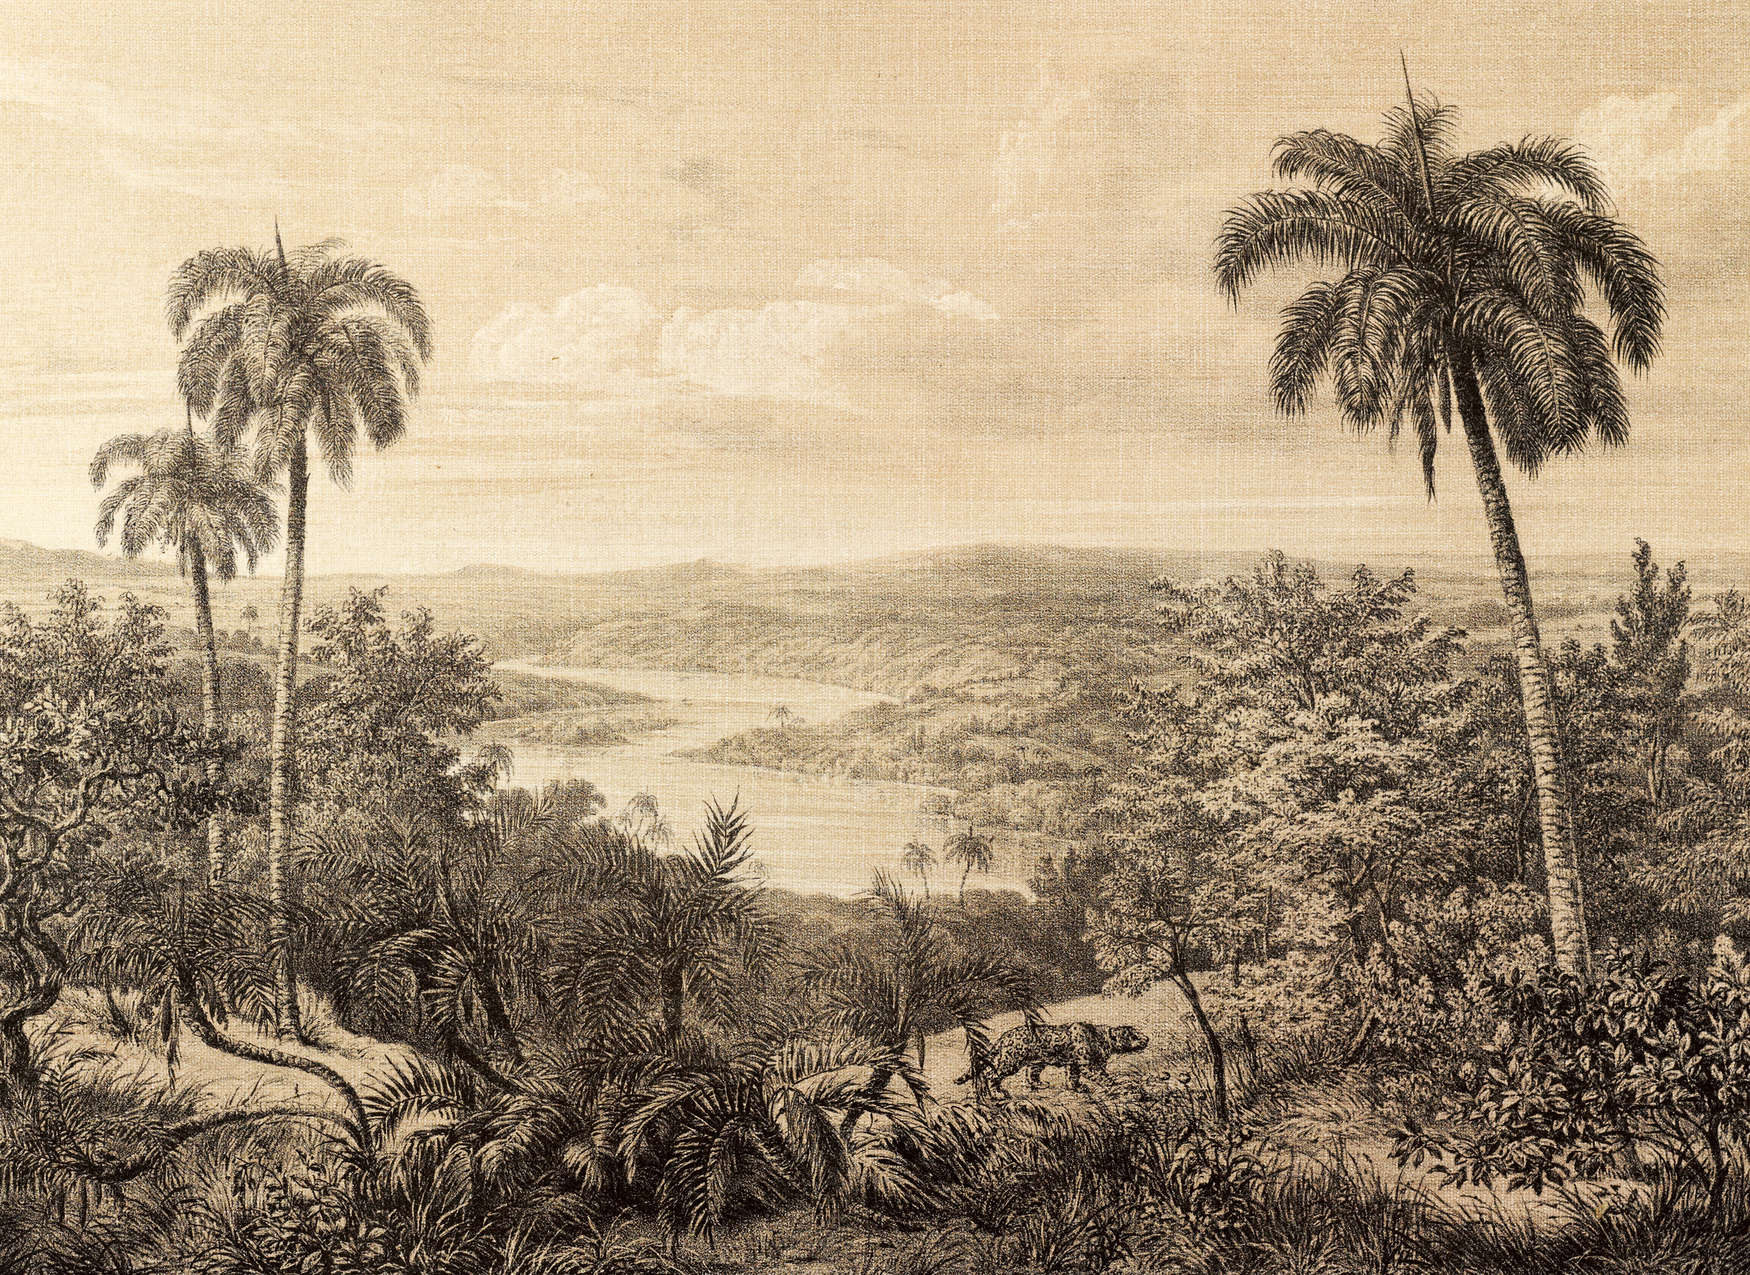             Papel pintado "Rainforest View" con textura de lino - Beige, Negro
        